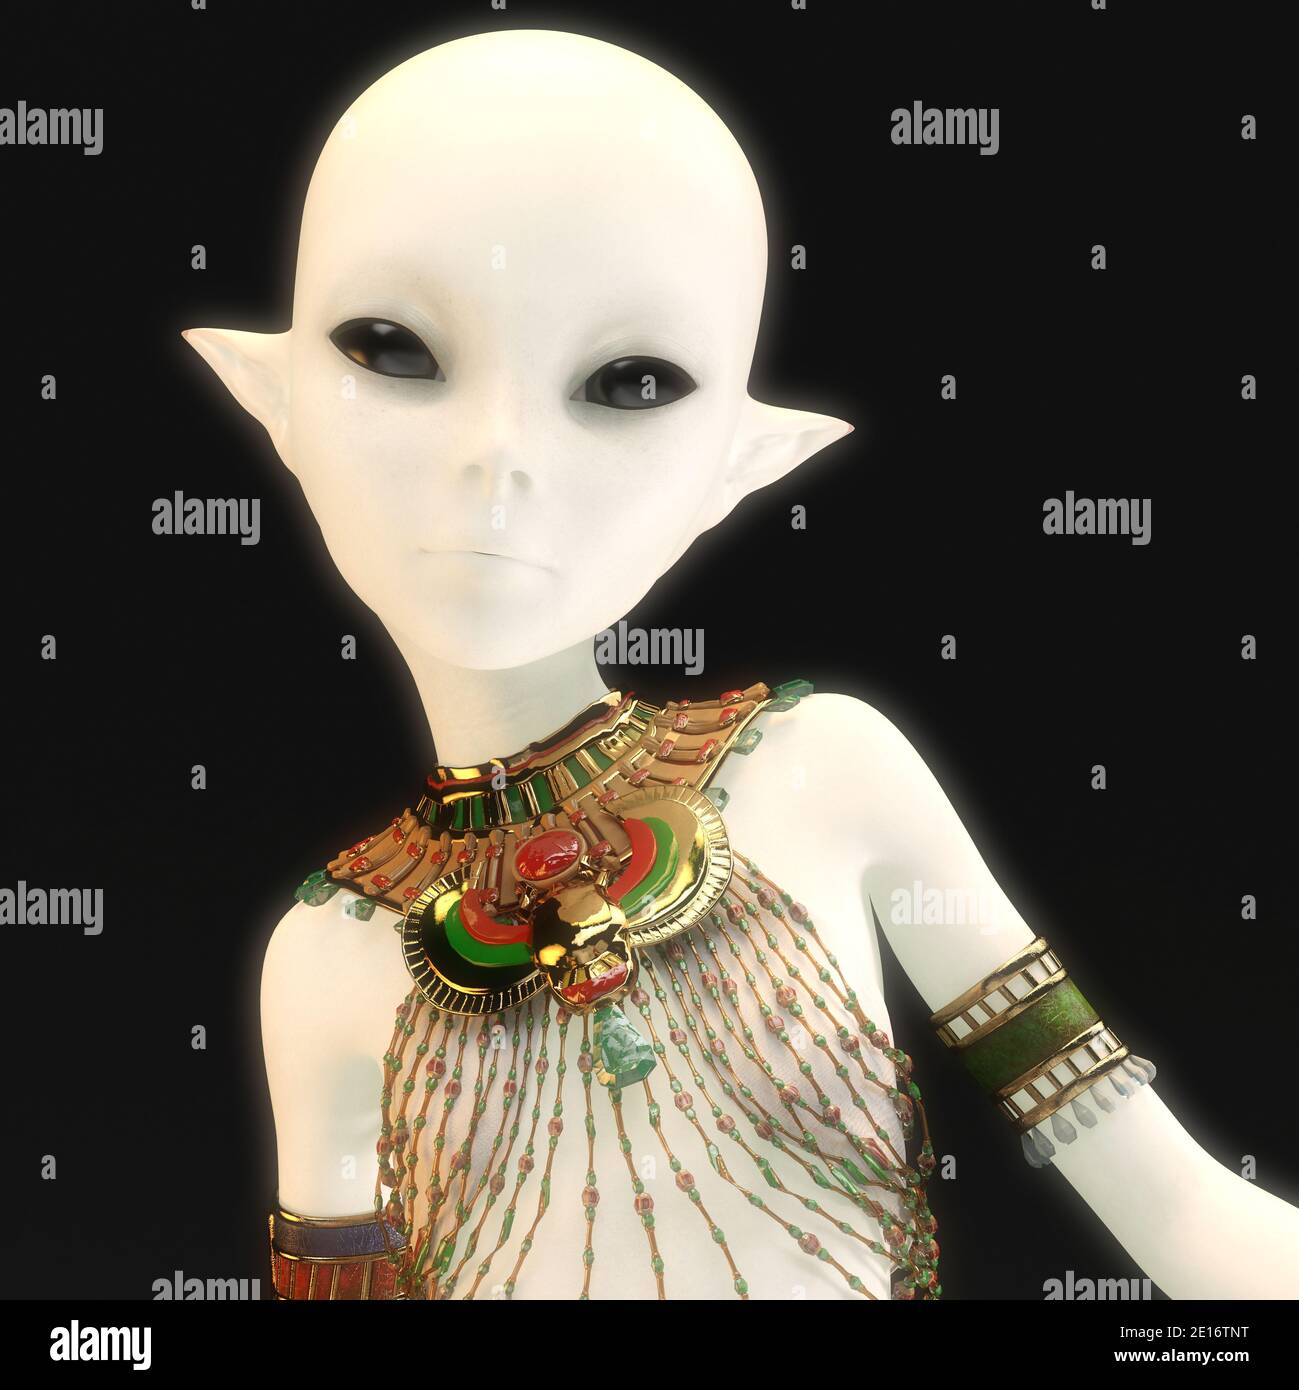 3D Illustration Of A Female Alien Stock Photo - Alamy